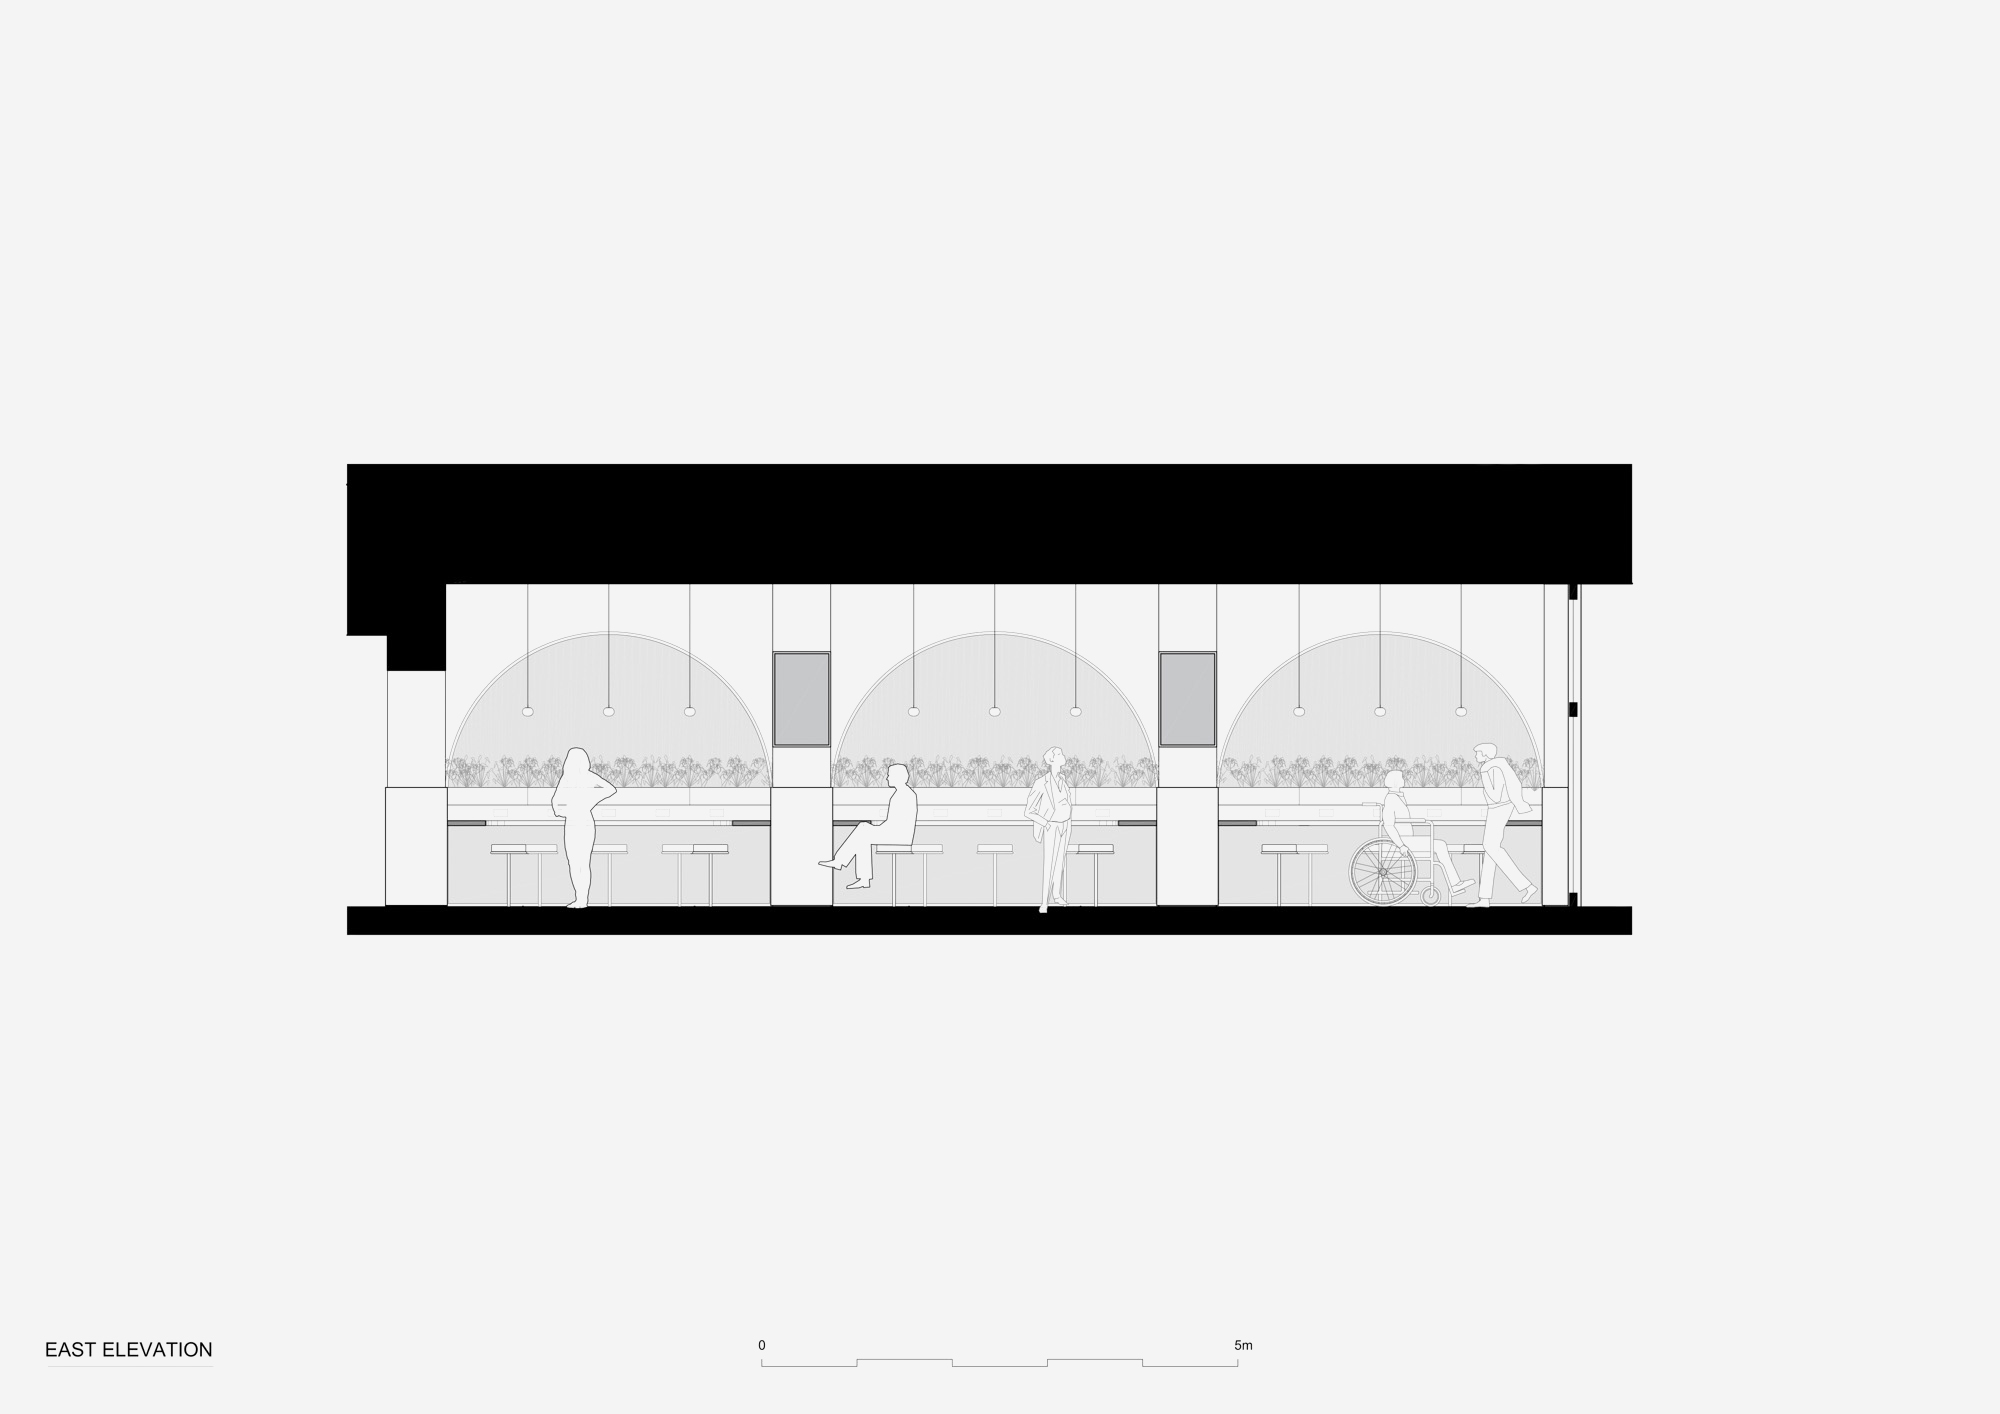 Valentino Architects - Malta - Departures Lounge